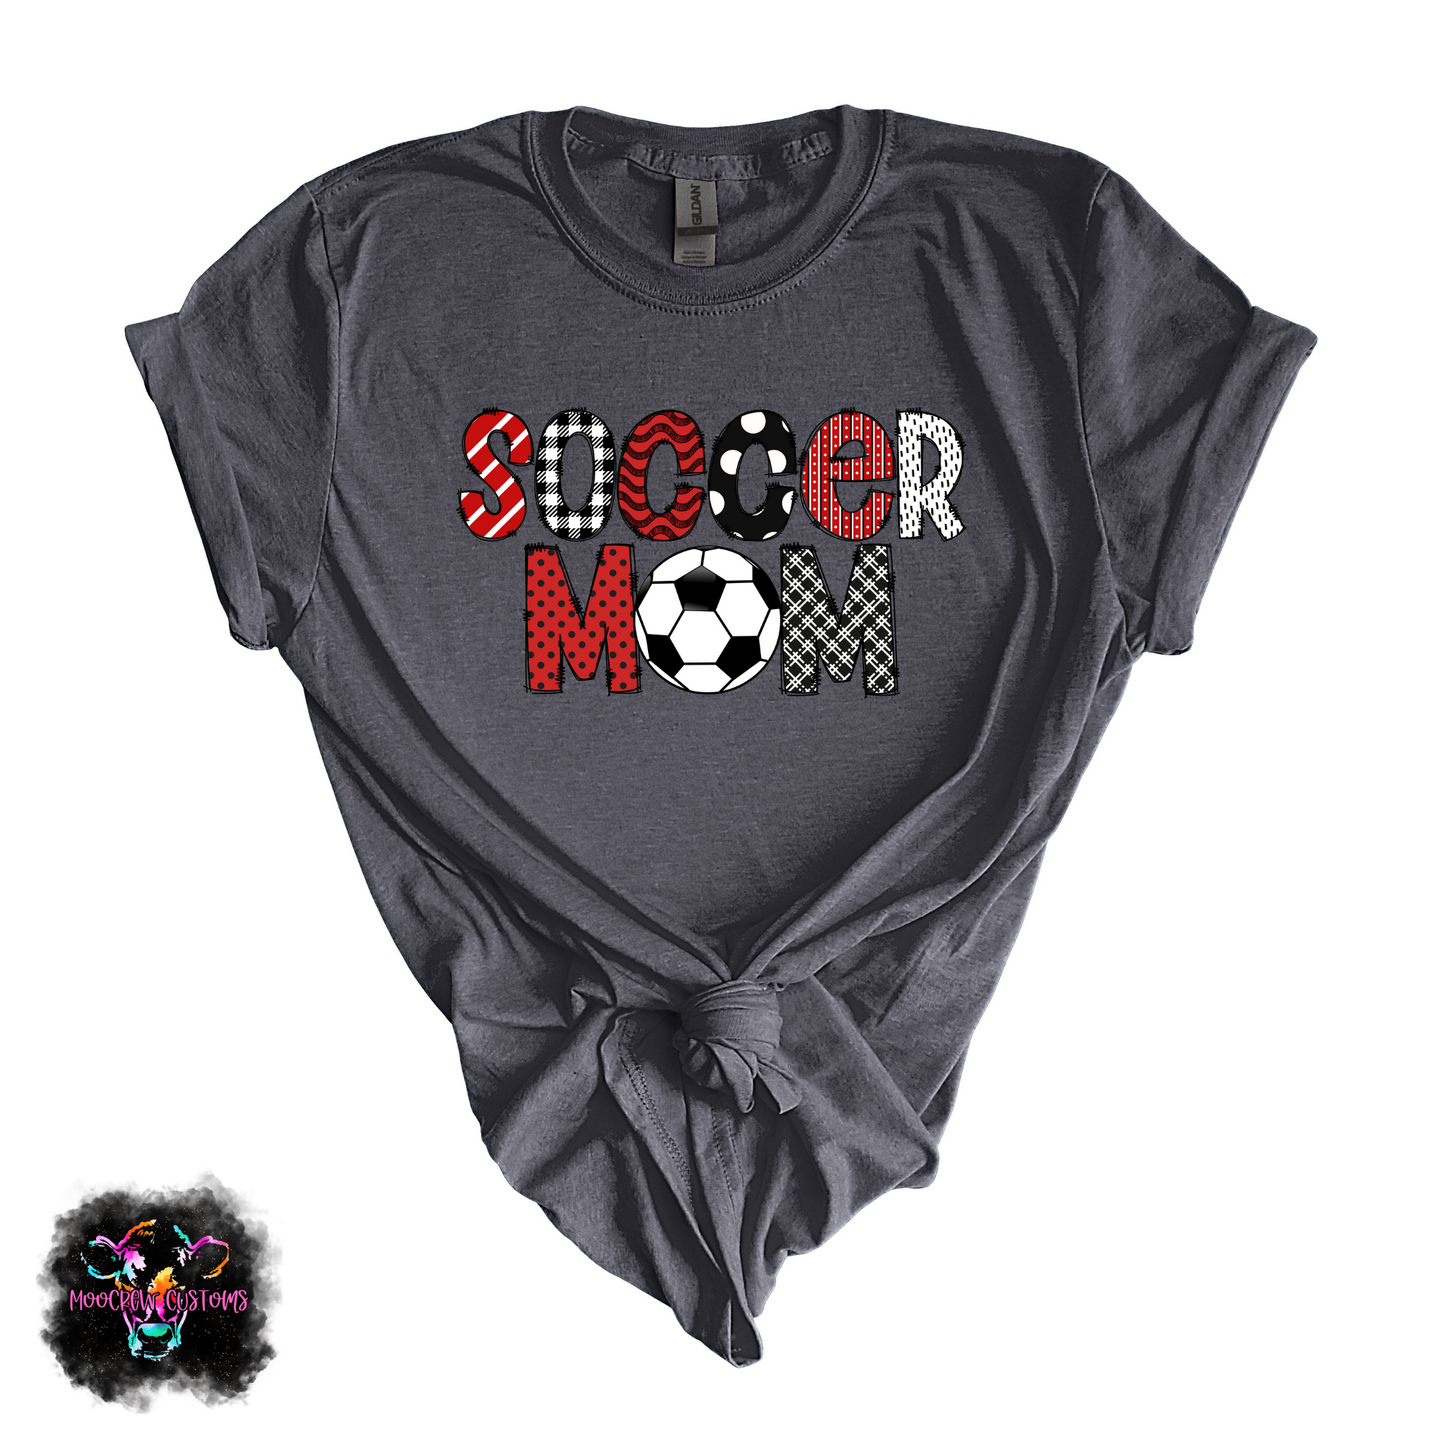 Soccer Mom Doodle Letters Tshirt